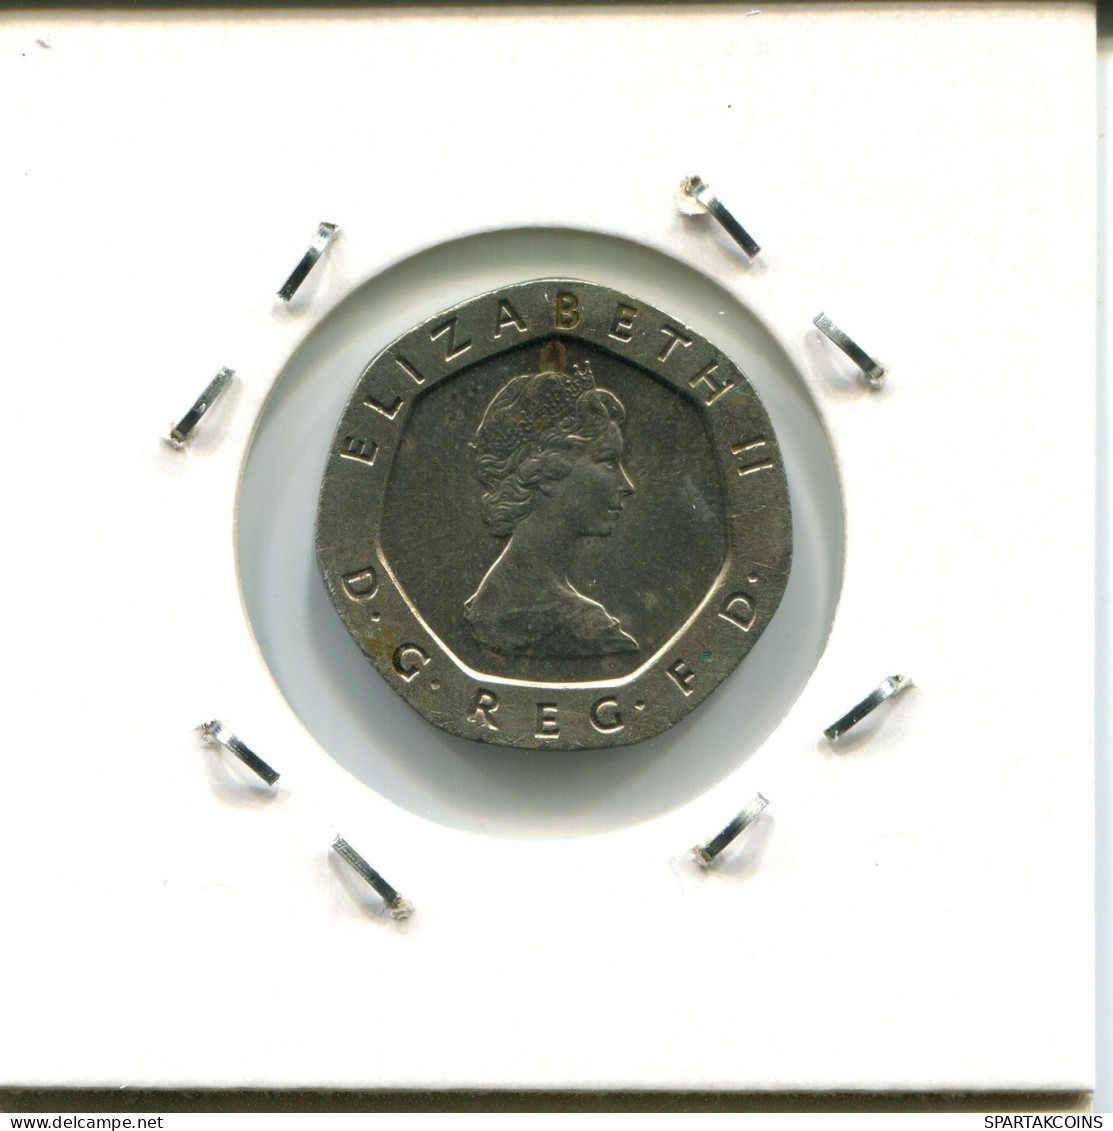 20 PENCE 1983 UK GROßBRITANNIEN GREAT BRITAIN Münze #AW994.D - 20 Pence